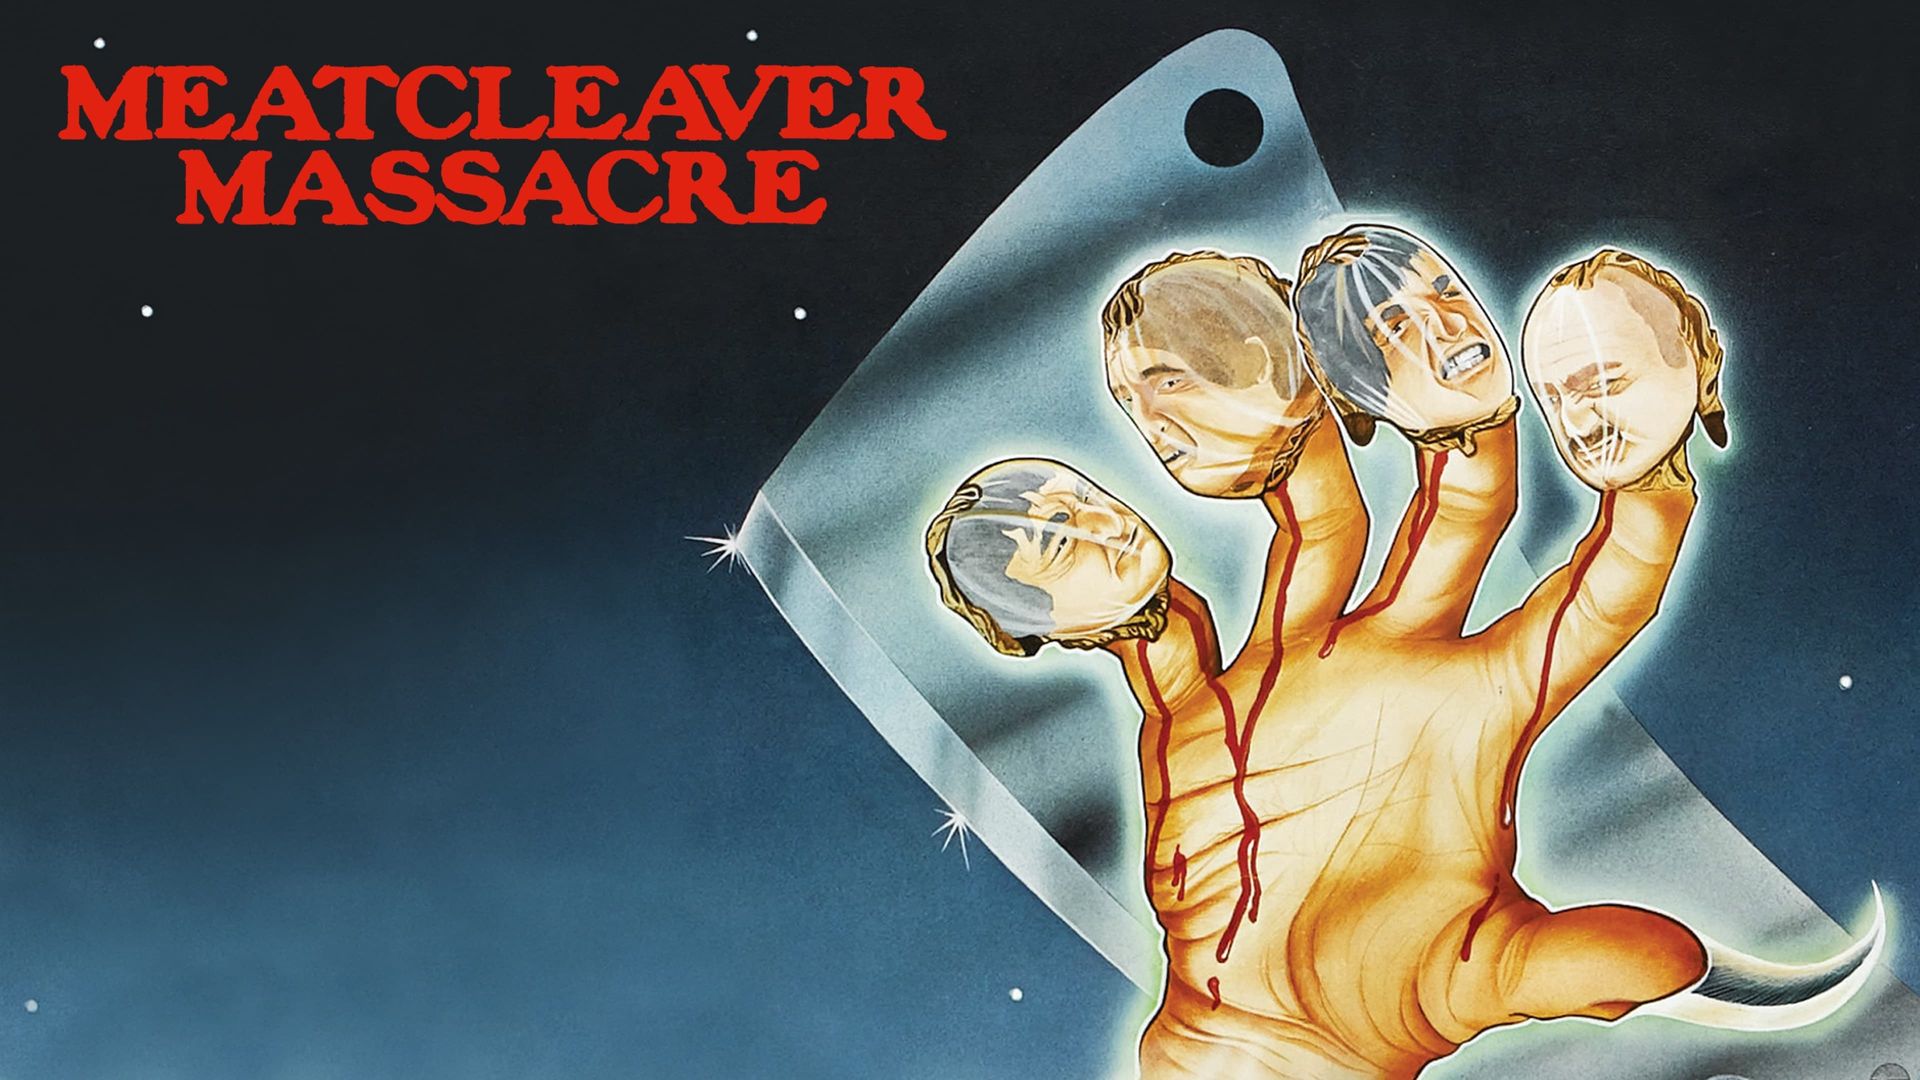 Meatcleaver Massacre background